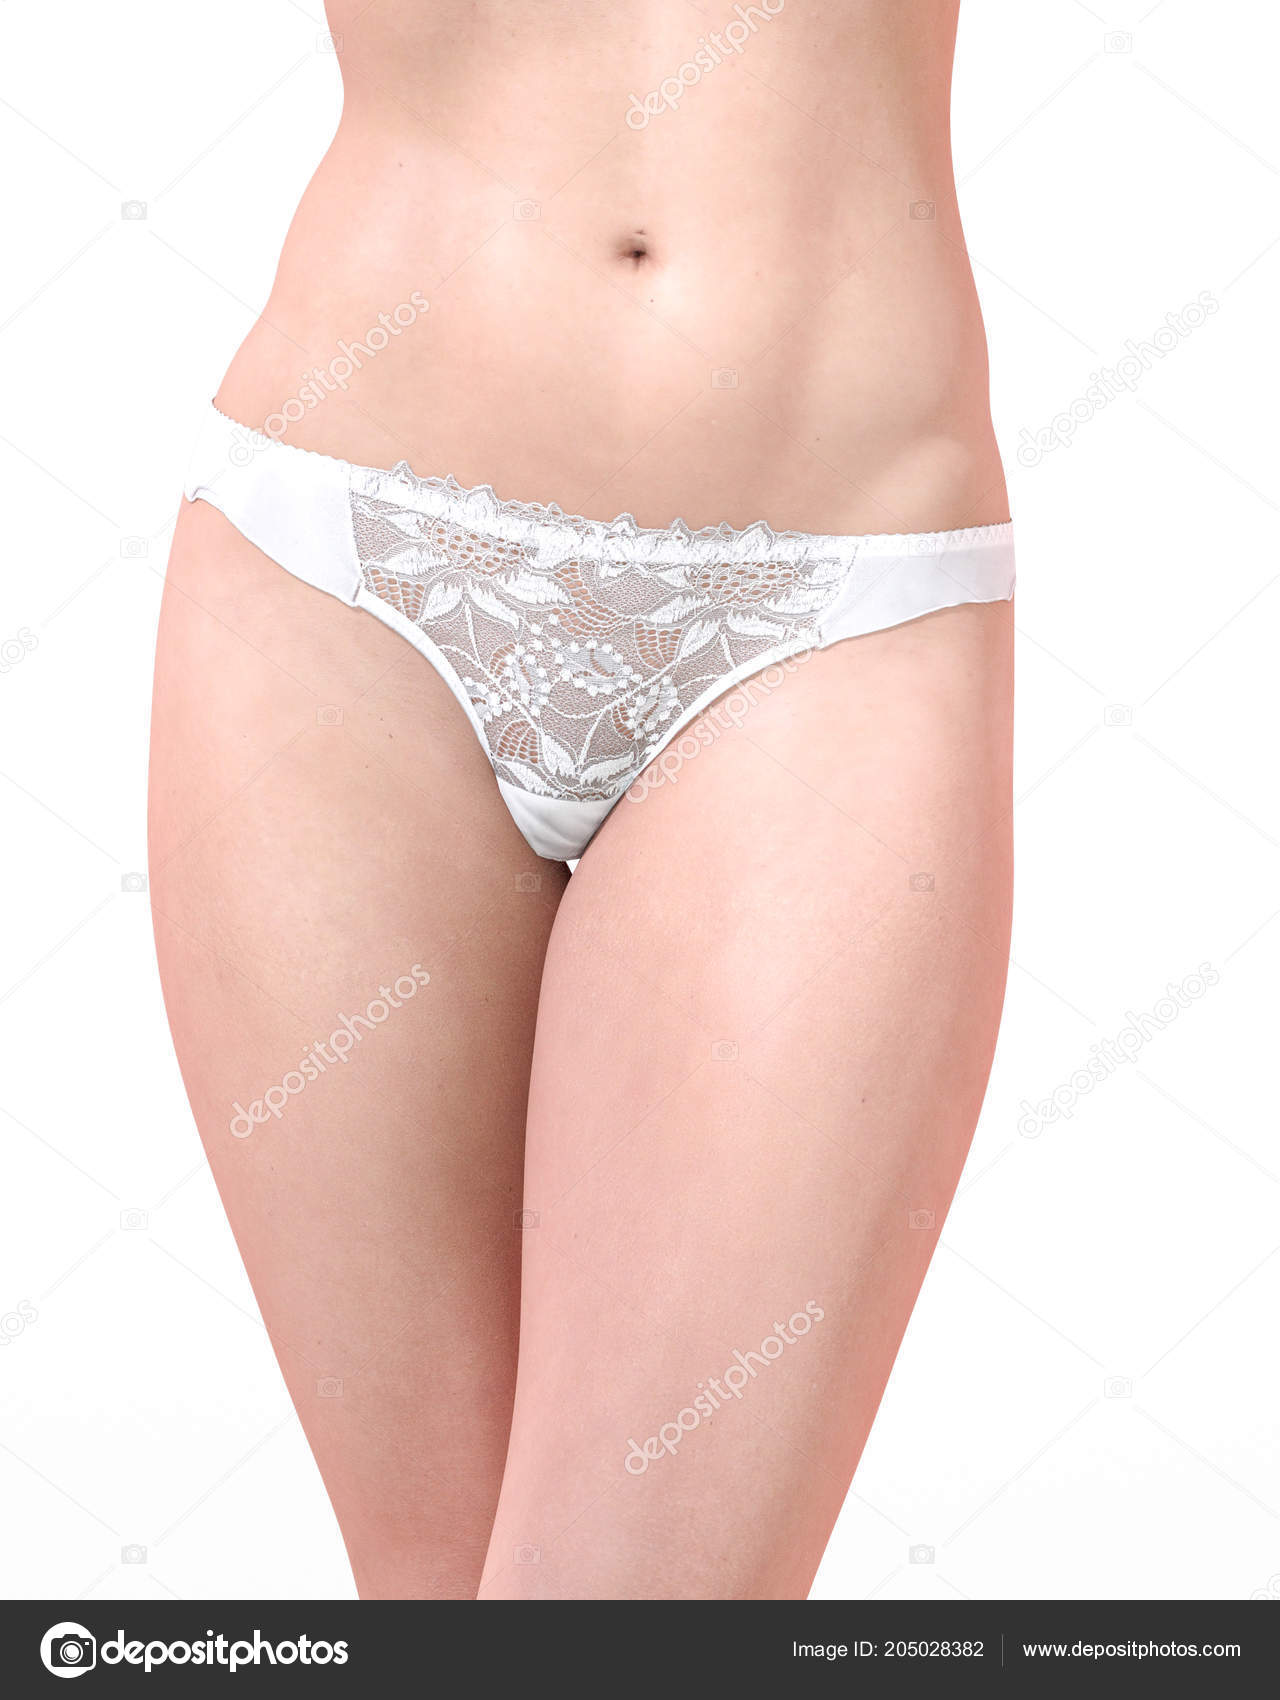 Girl Sexy Panty Transparent Panties Underwear Extravagant Fashion Art Woman Stock Photo Image By C Vlad Nikon 205028382